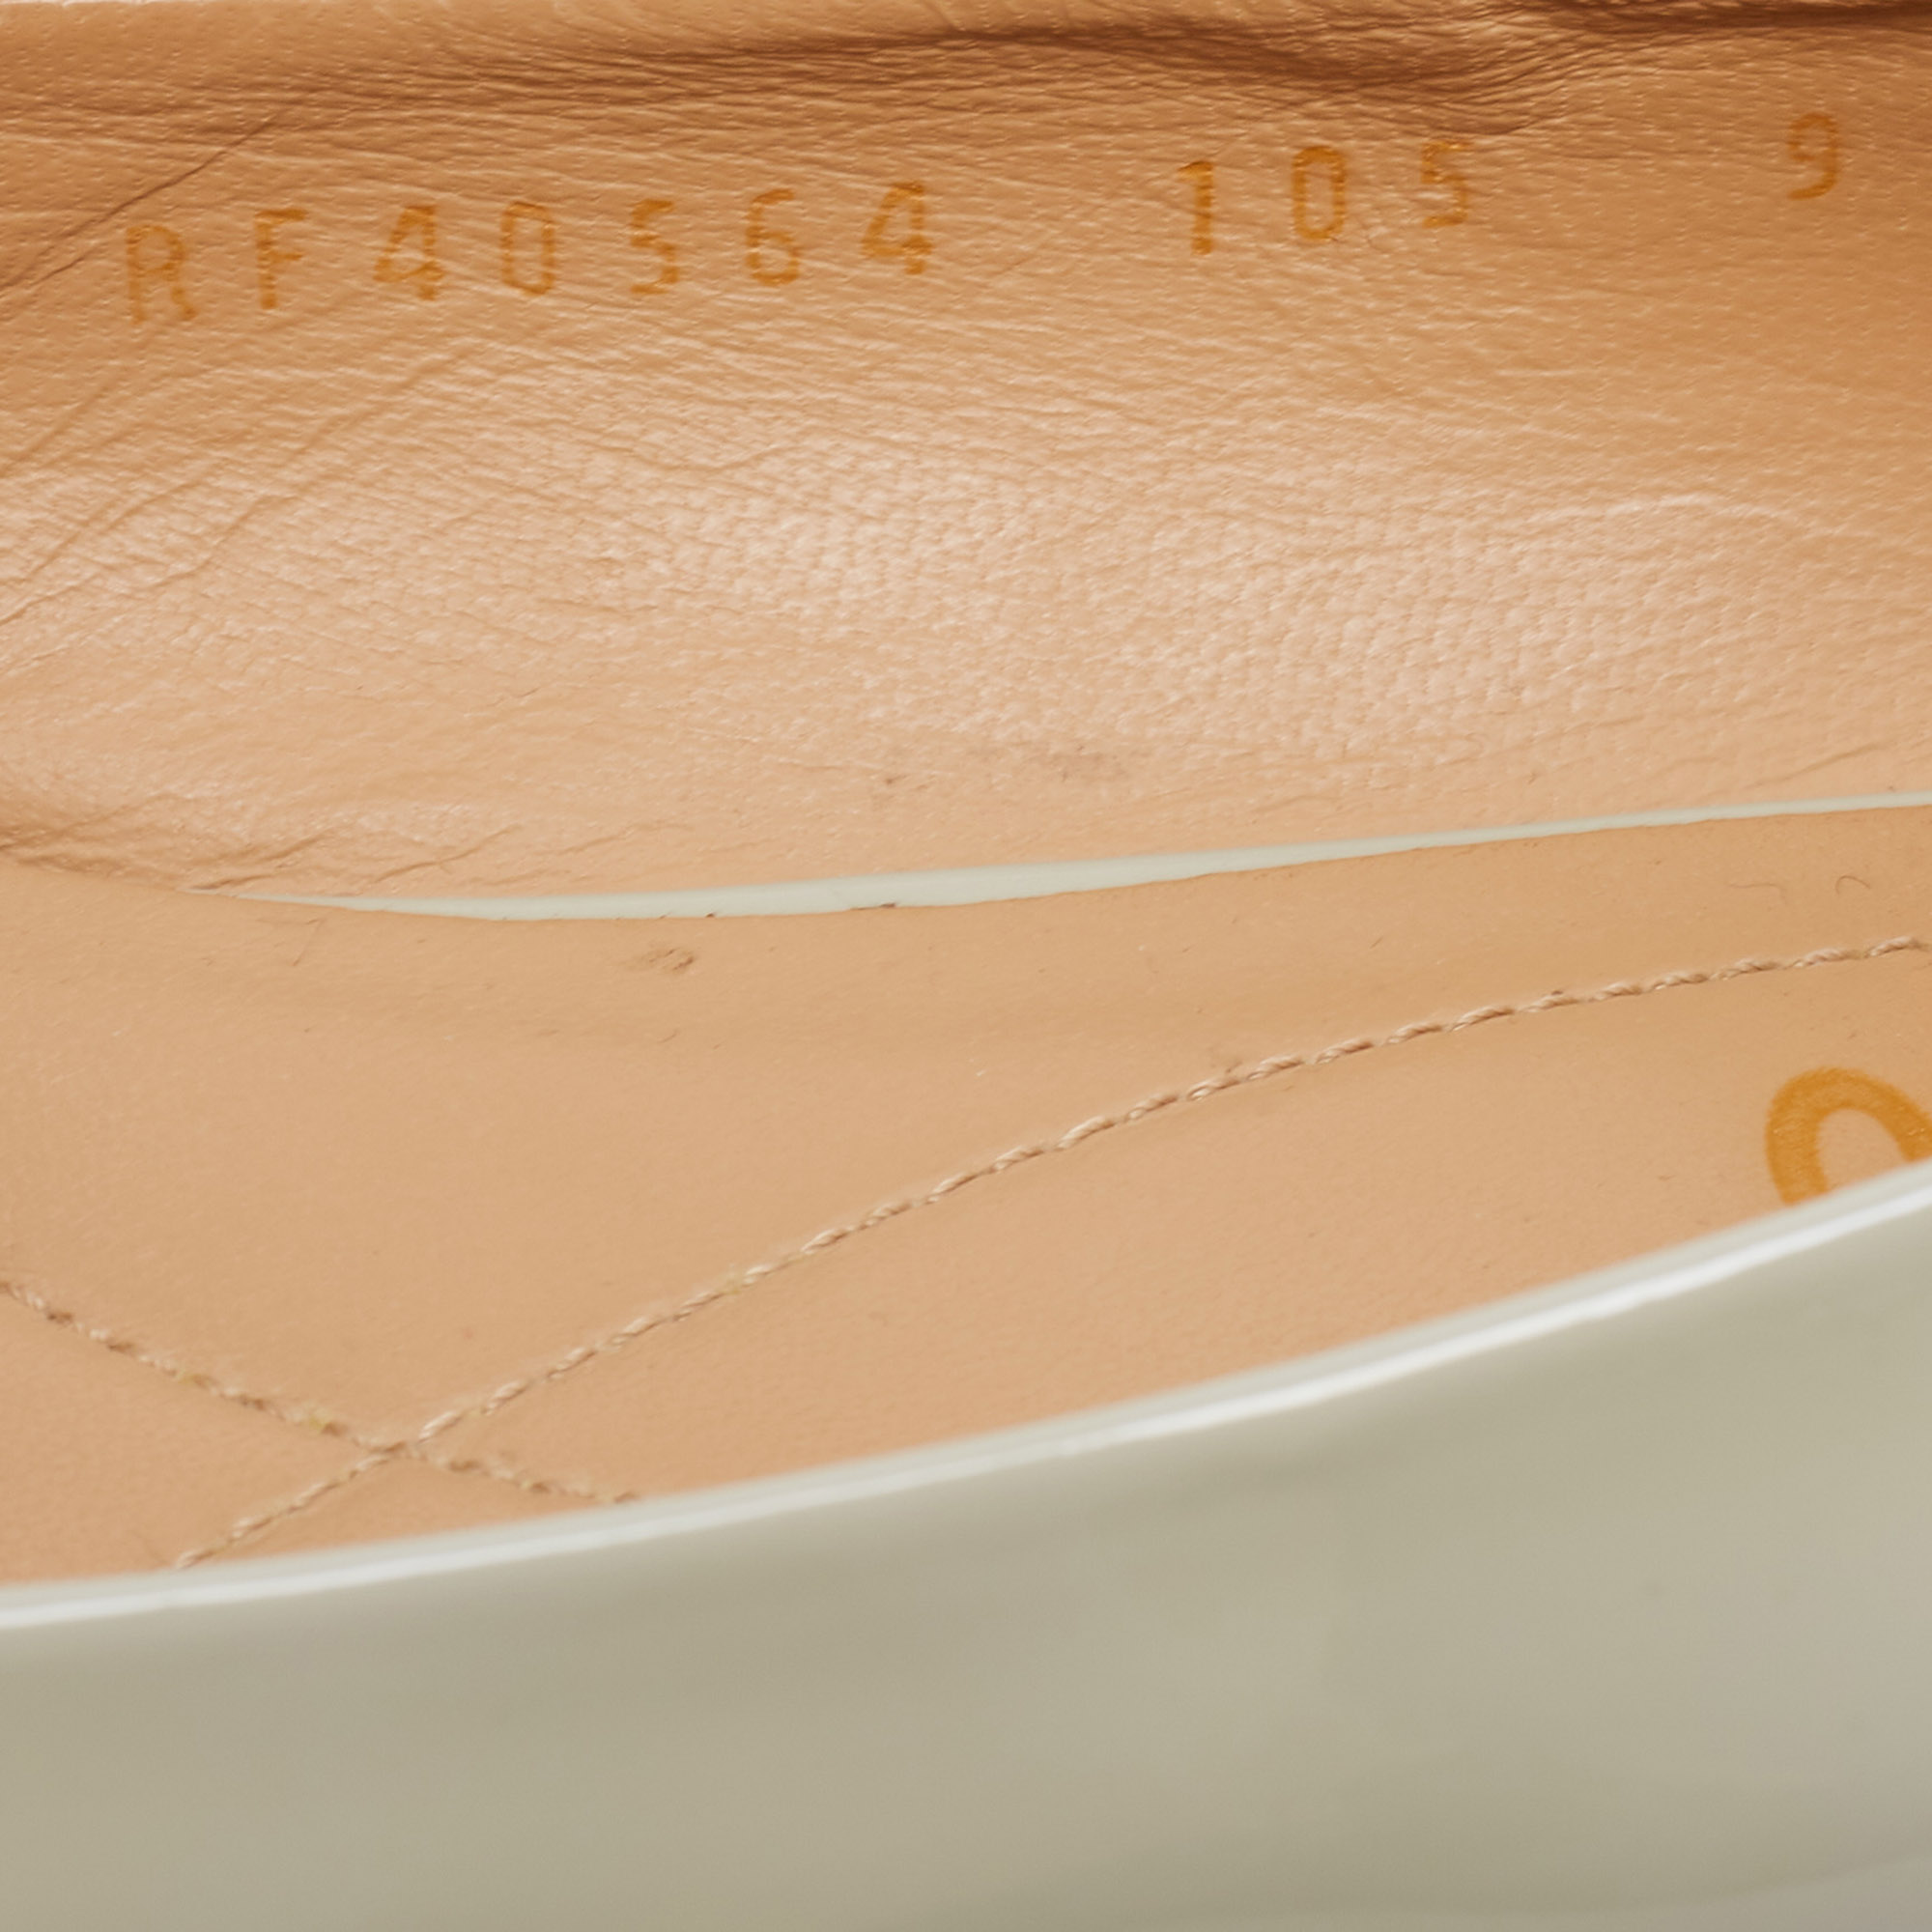 Salvatore Ferragamo Grey Patent Leather Varina Ballet Flats Size 39.5